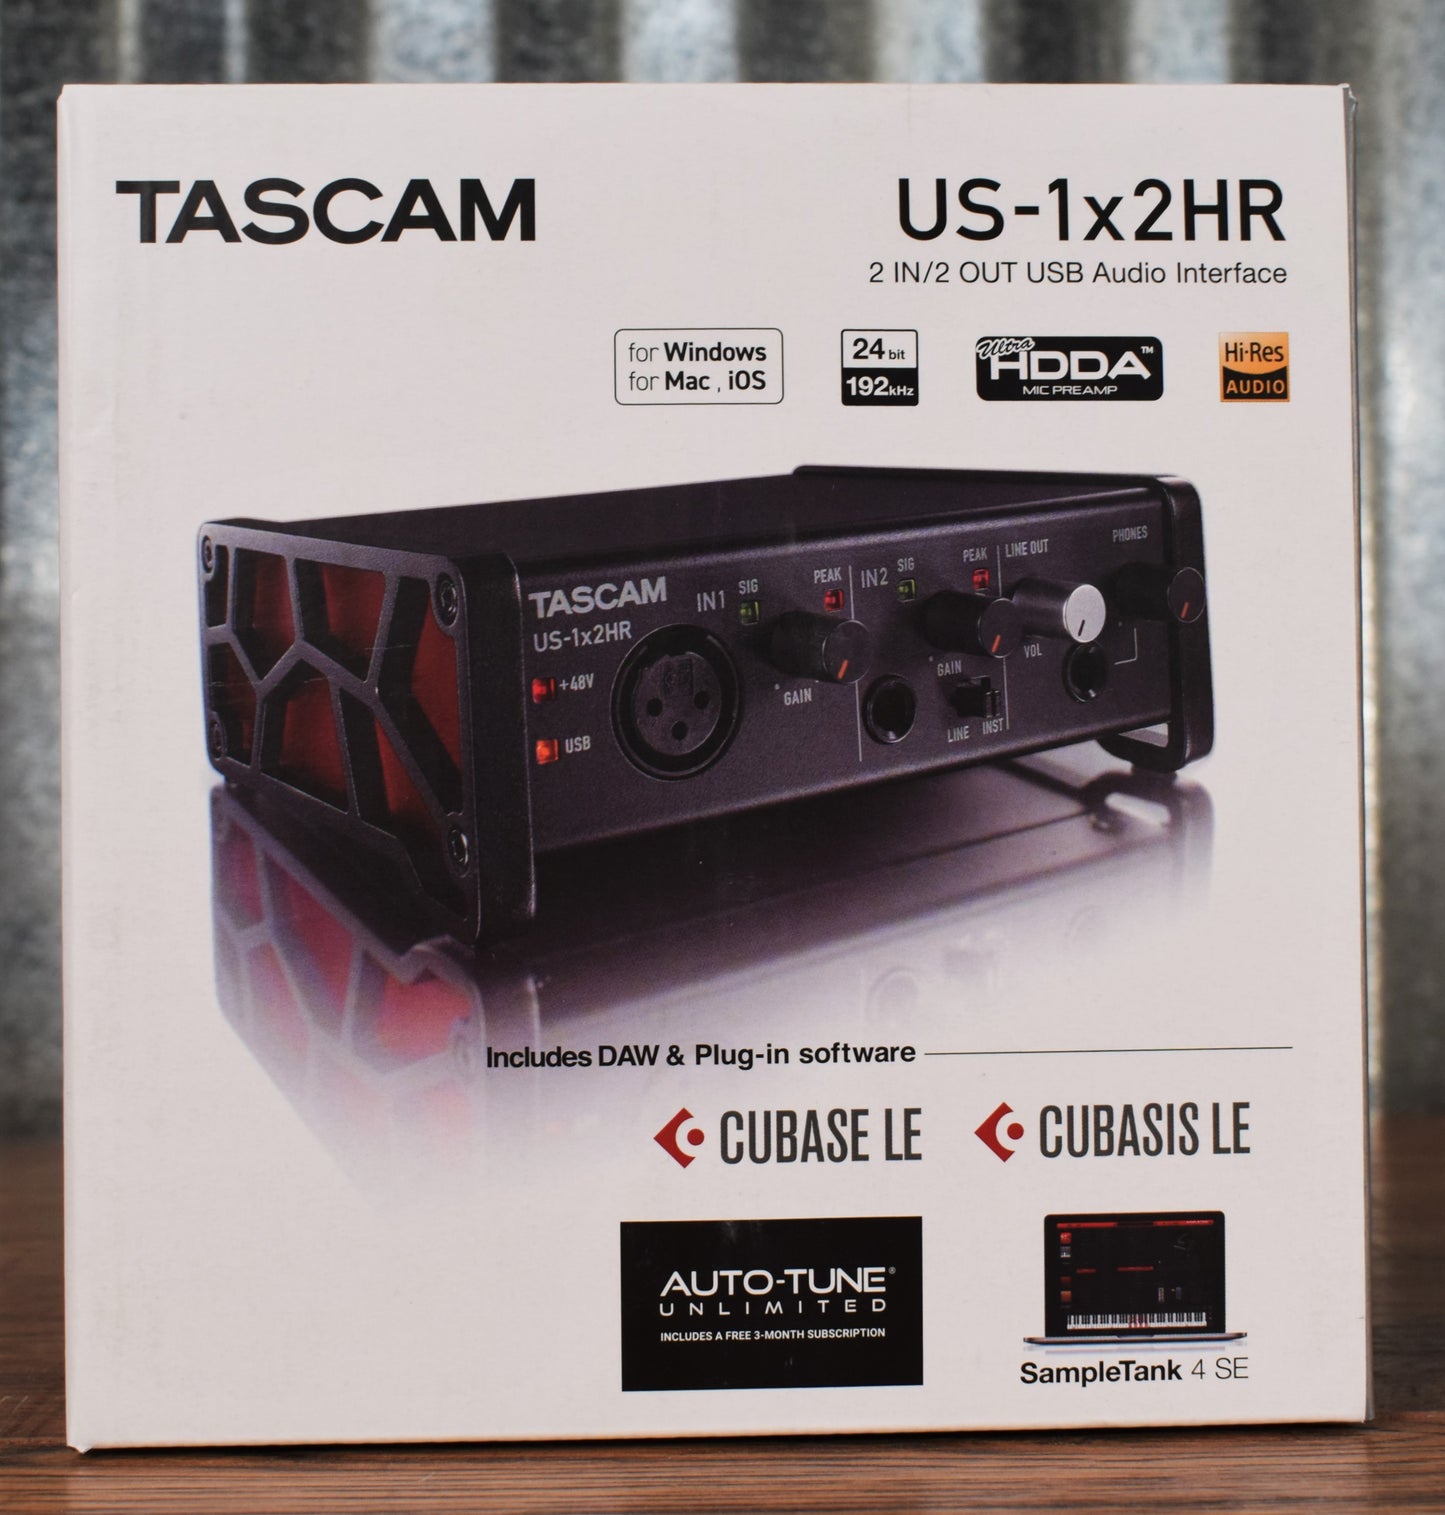 Tascam US-1X2HR 1x2 USB Audio Recording Interface